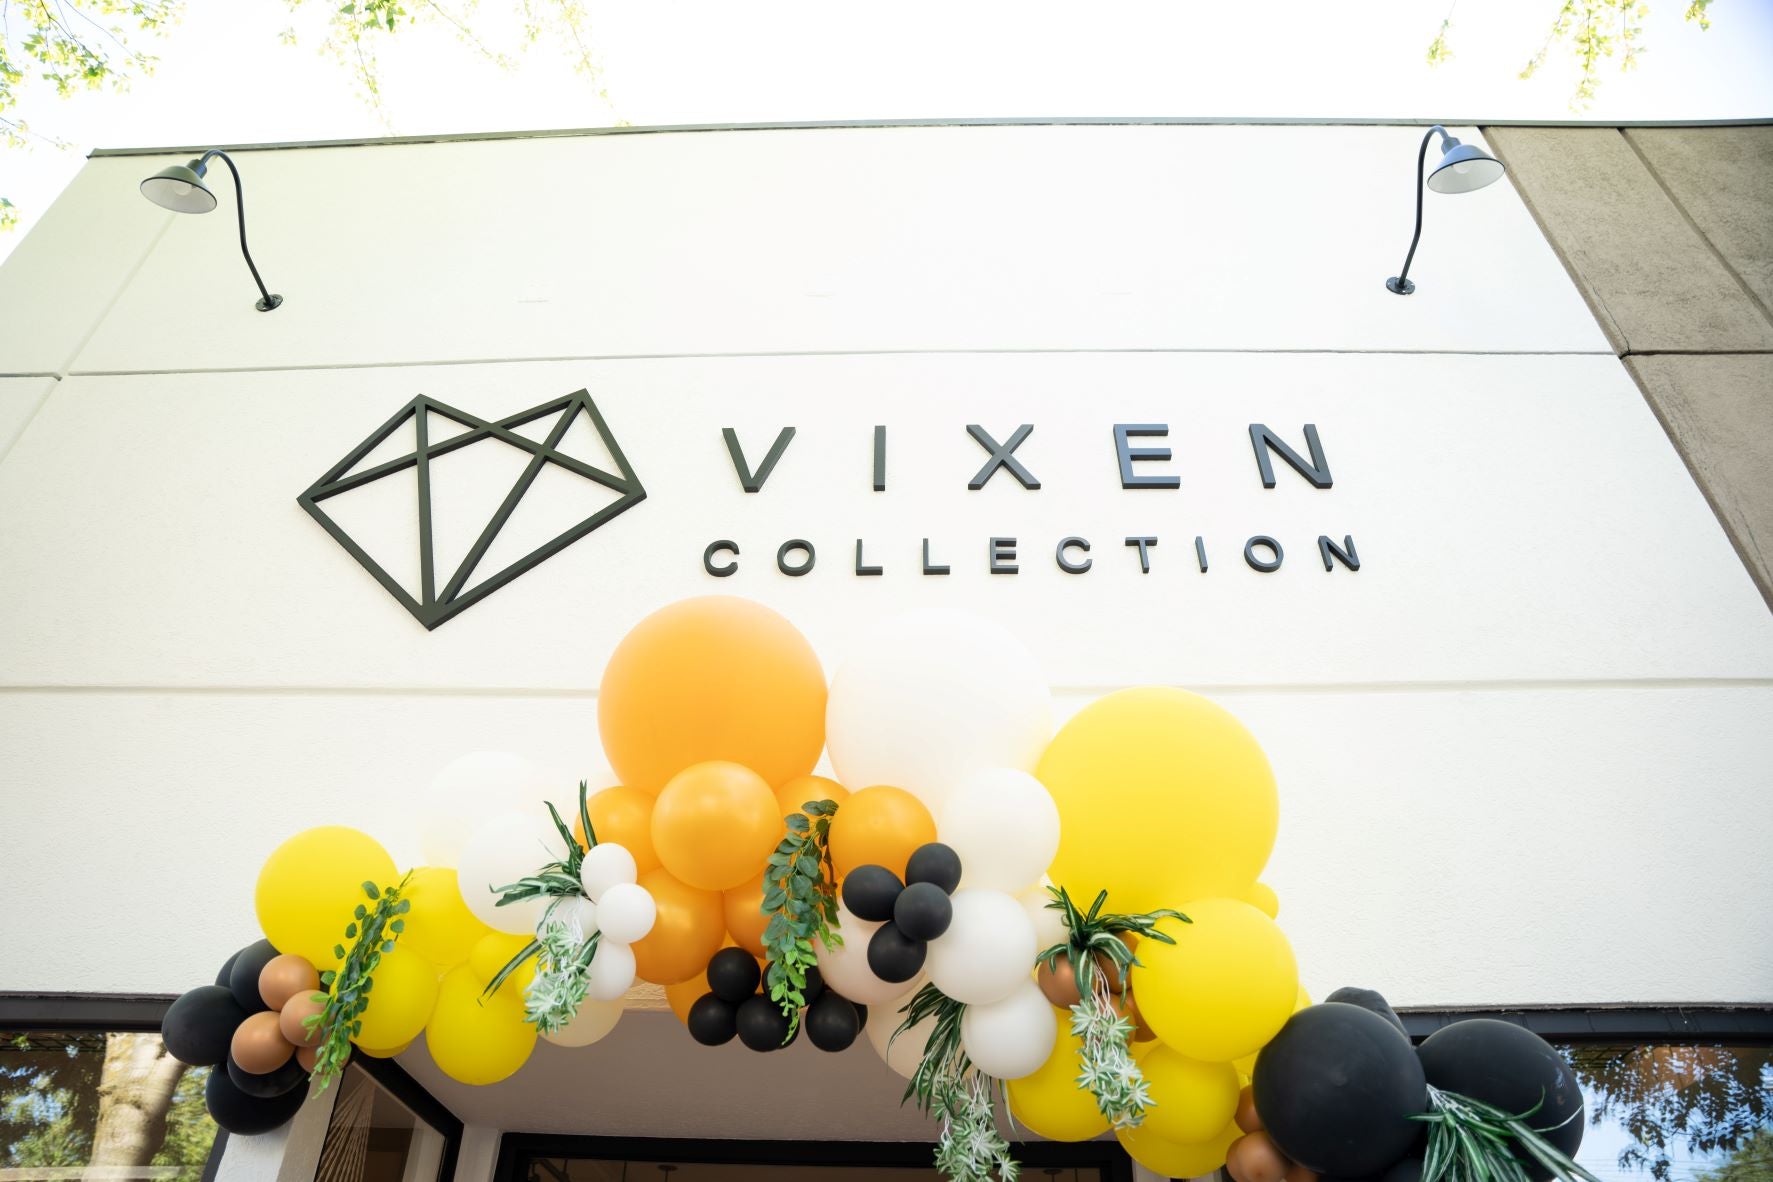 Vixen Collection: Queen Anne Red Carpet Event